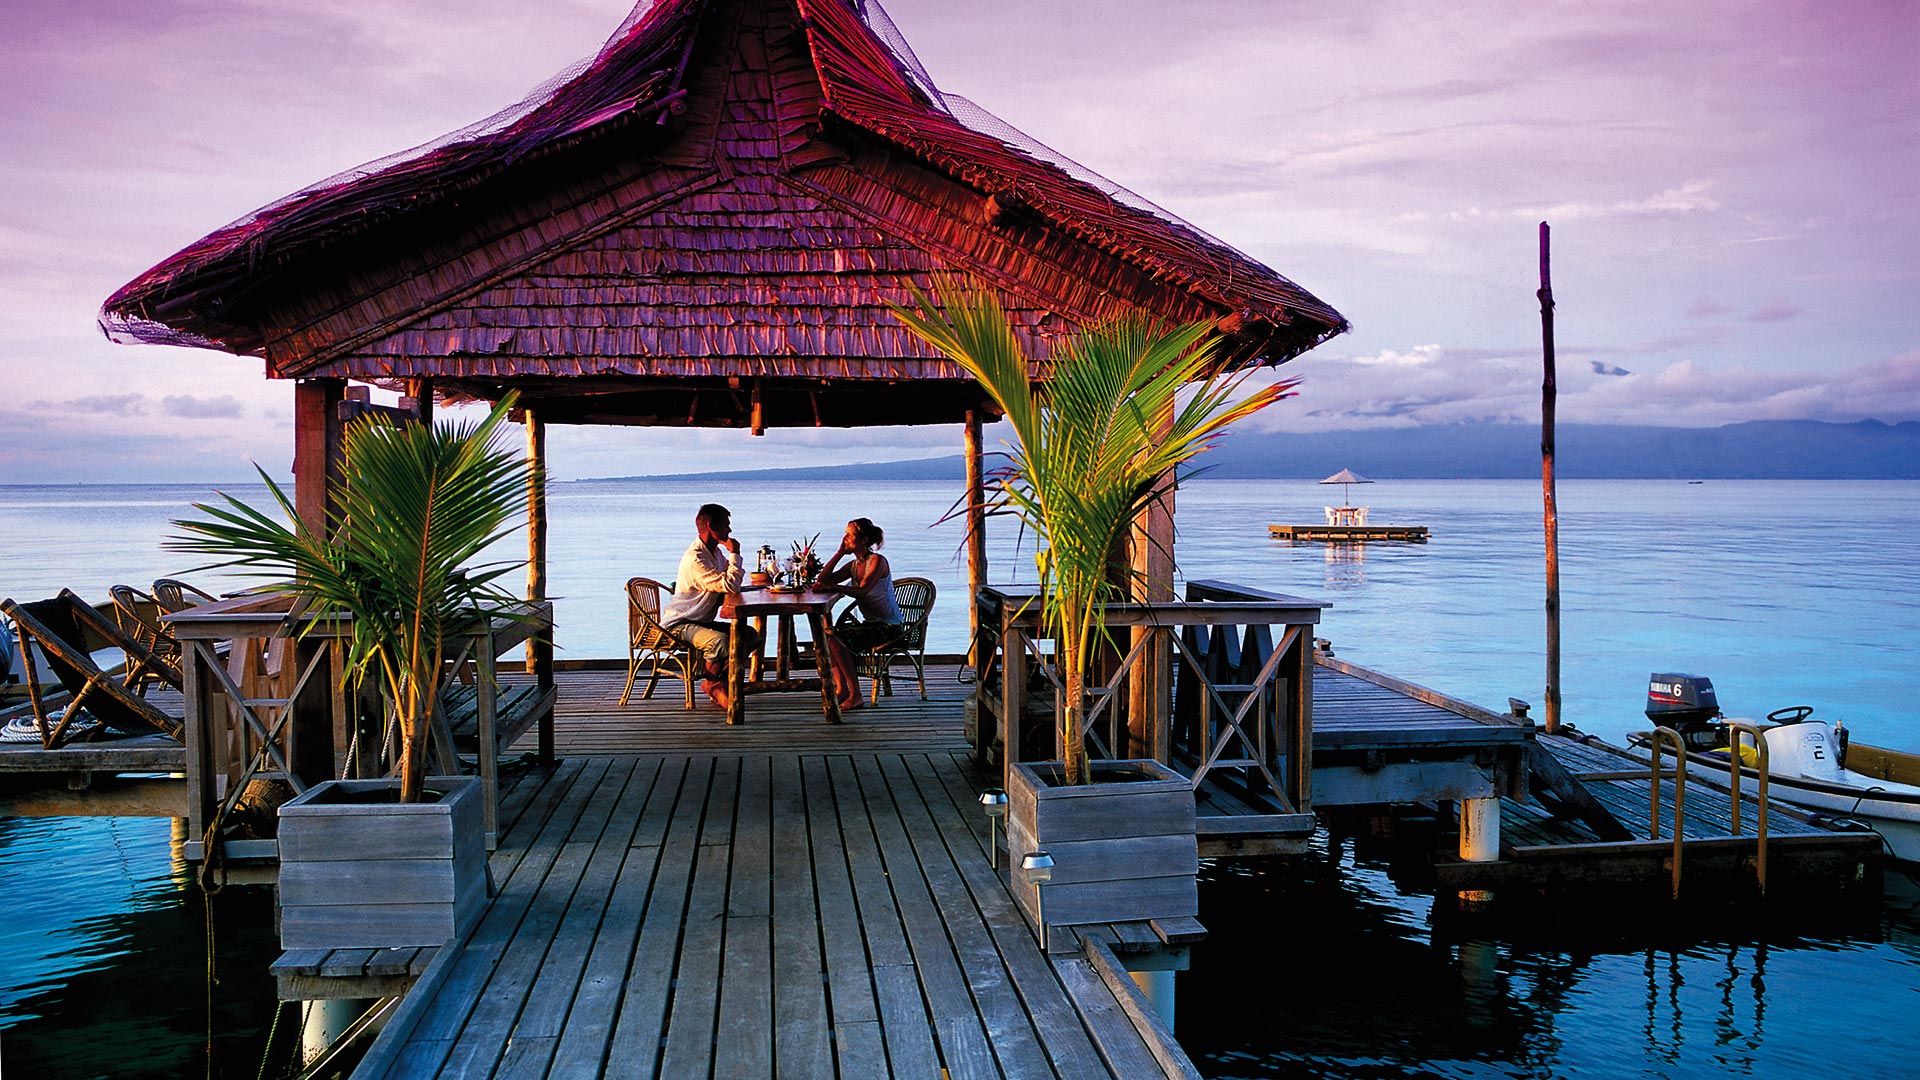 Solomon Islands 5 ways - Travel Weekly